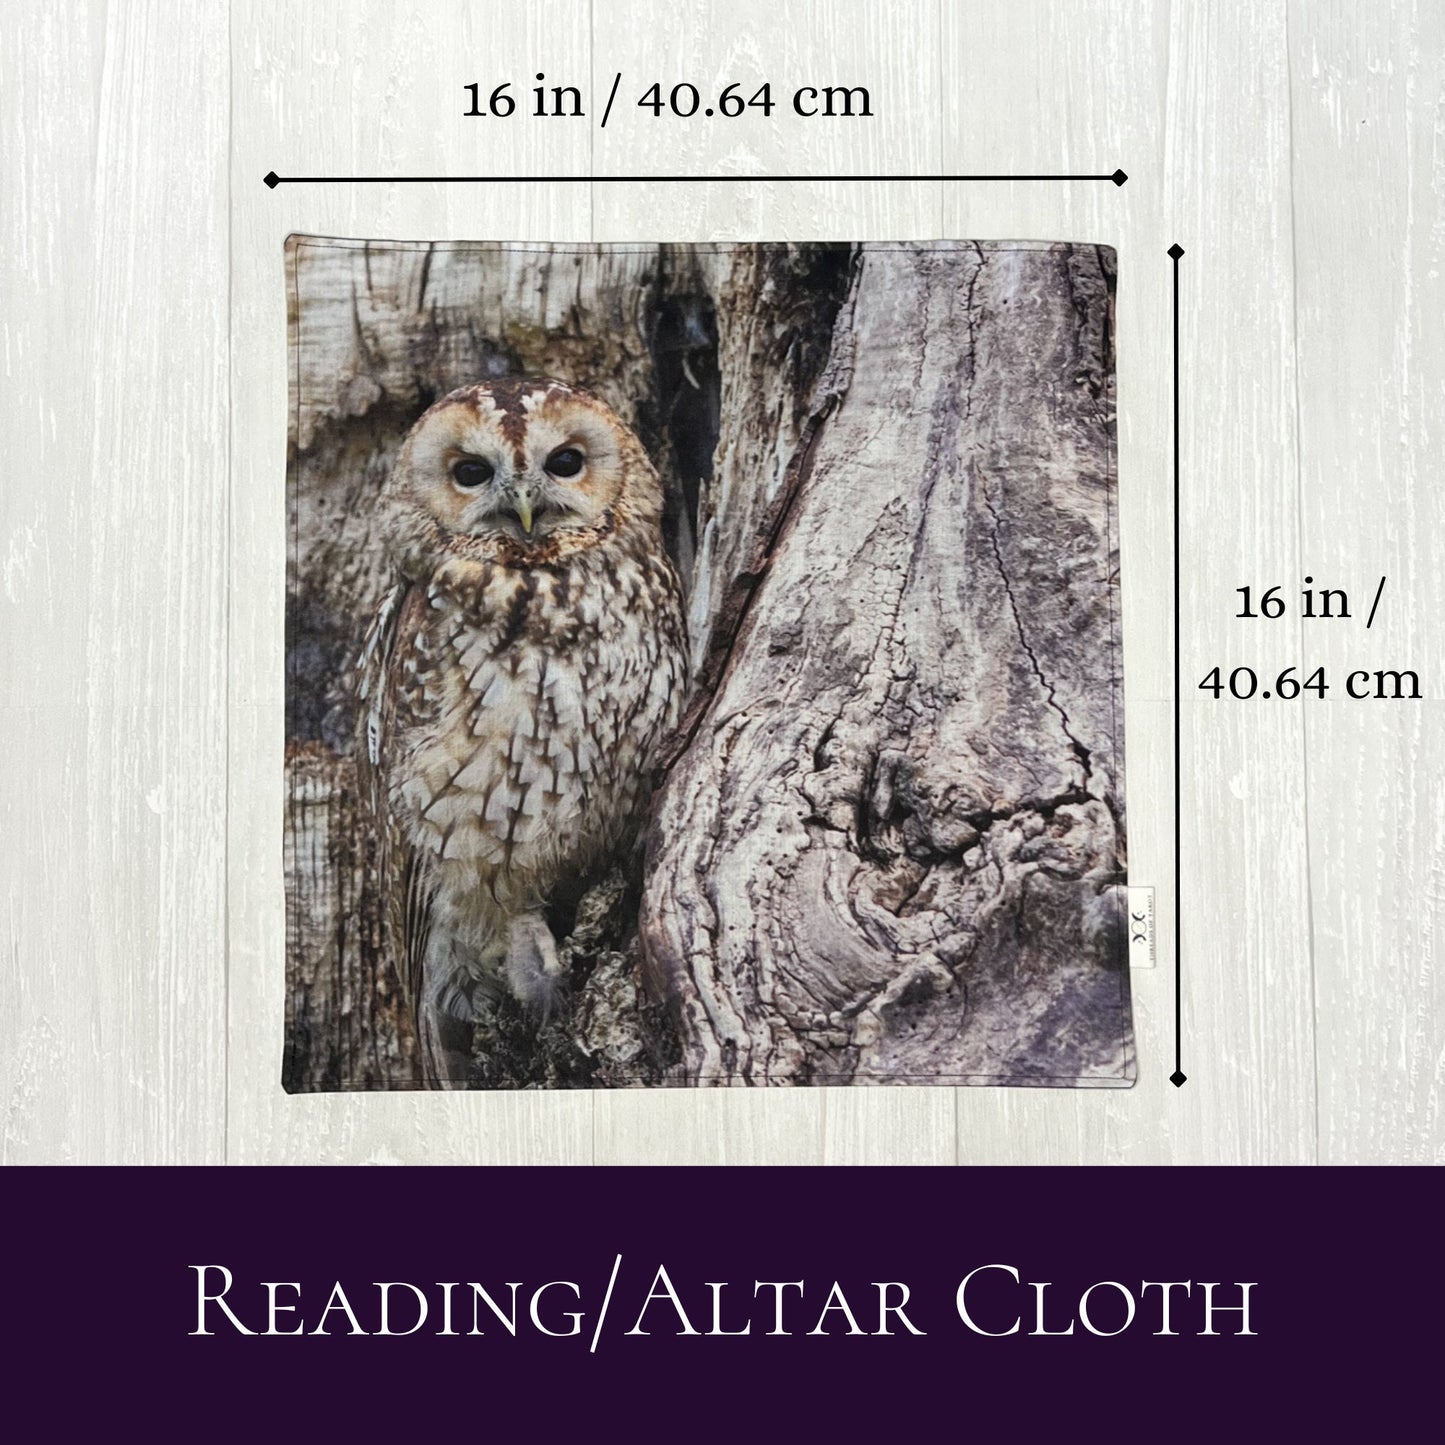 Owl Altar Cloth, Tarot Cloth, Altar Ritual Cloth, Rune Casting Cloth, Tarot Reading Supplies, Pagan Witchcraft Wiccan, Divination Tools